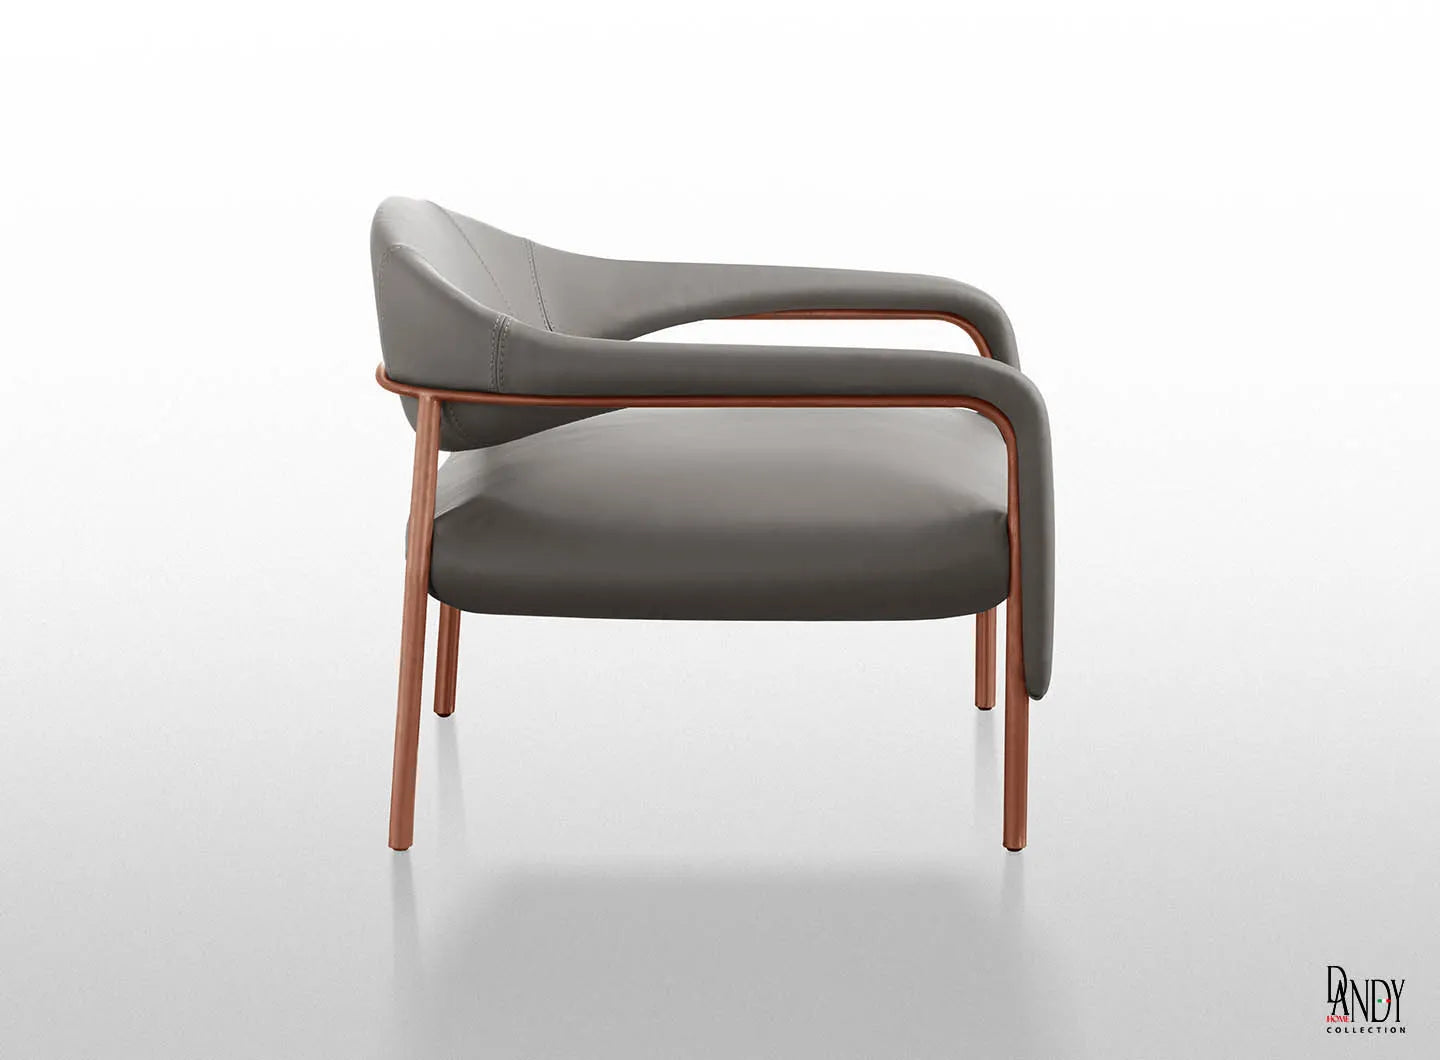 Spyder Leather chair | HOG - Home. Office. Garden online marketplace